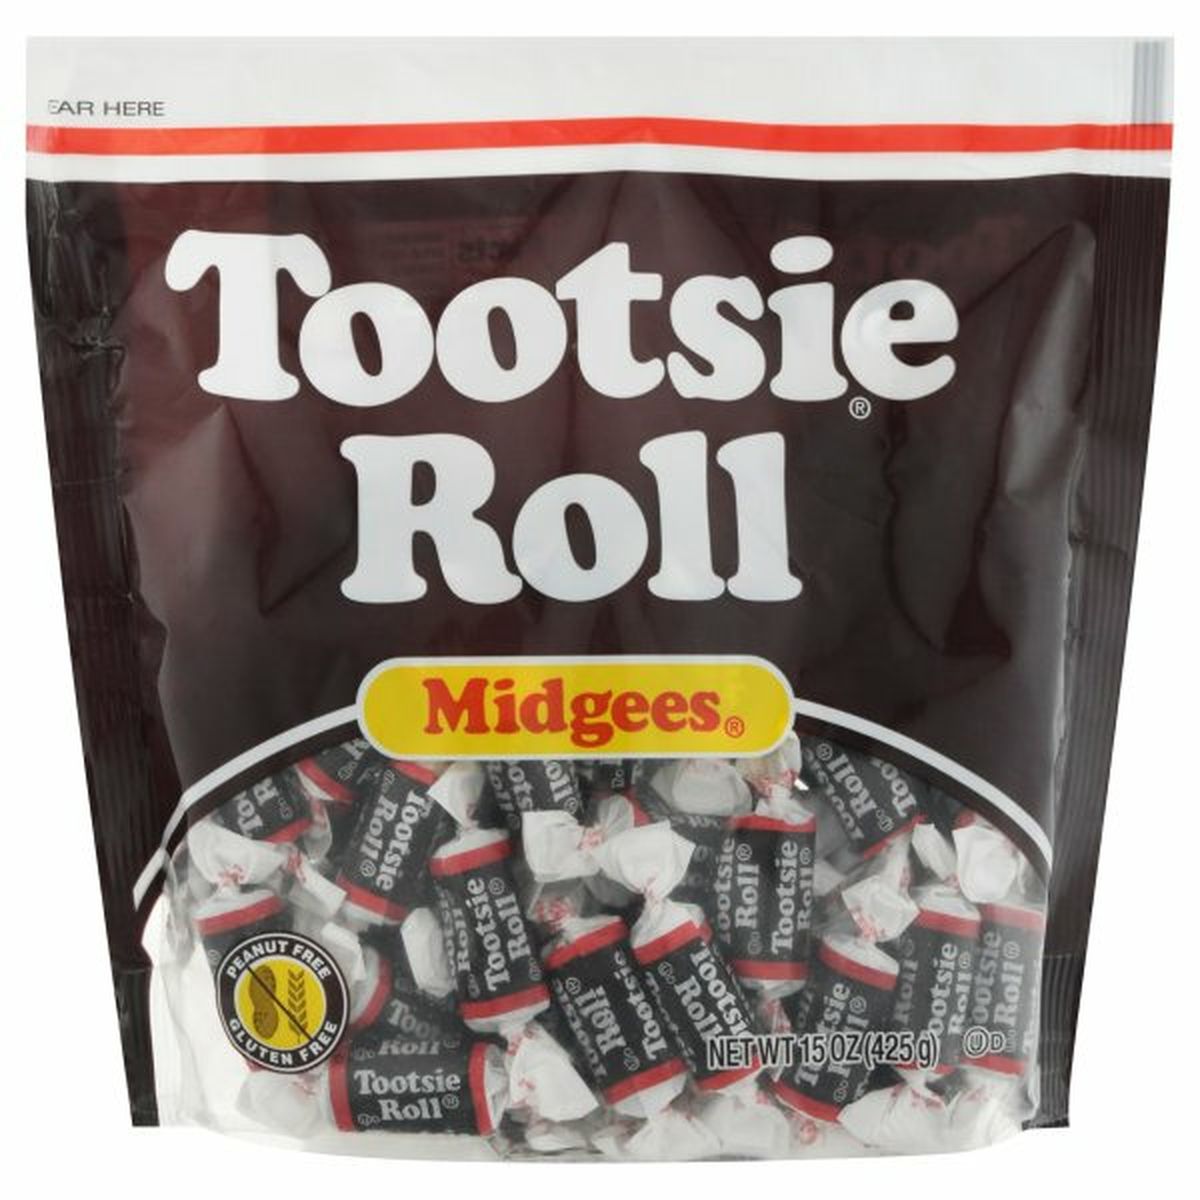 Calories in Tootsie Roll Midgees